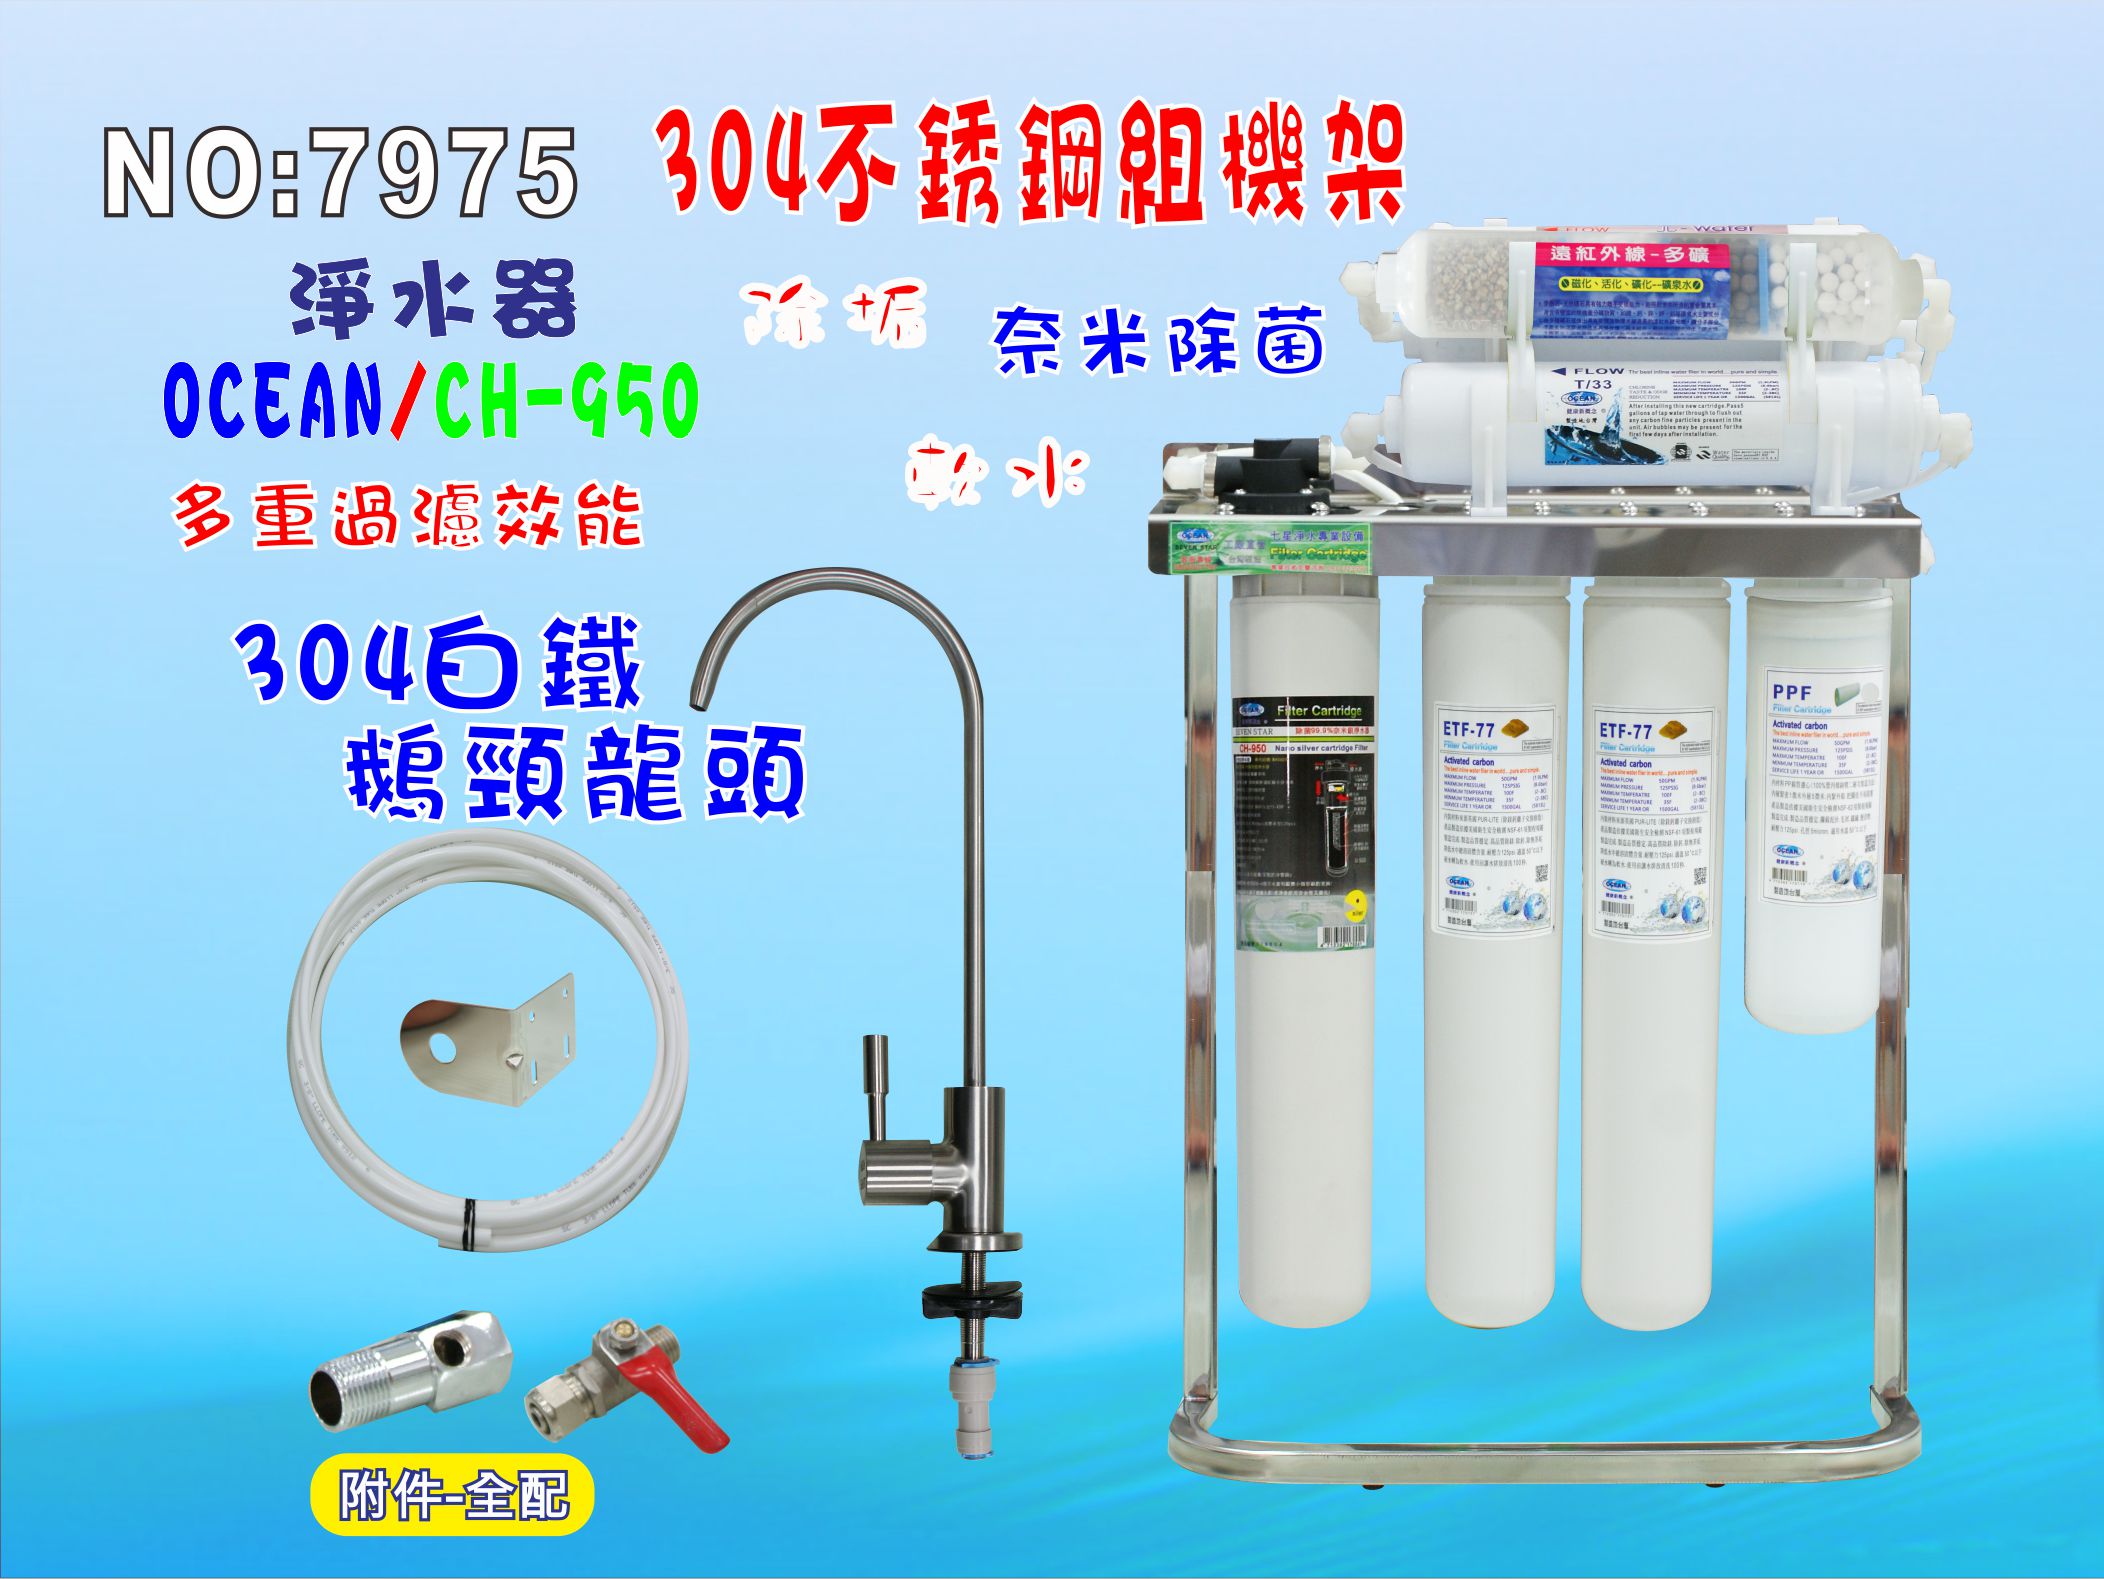 CH-950奈米淨水器. OCEAN卡式濾心餐飲.飲水機.開水機.過濾器.咖啡機.製冰機貨號: 7975【七星淨水】